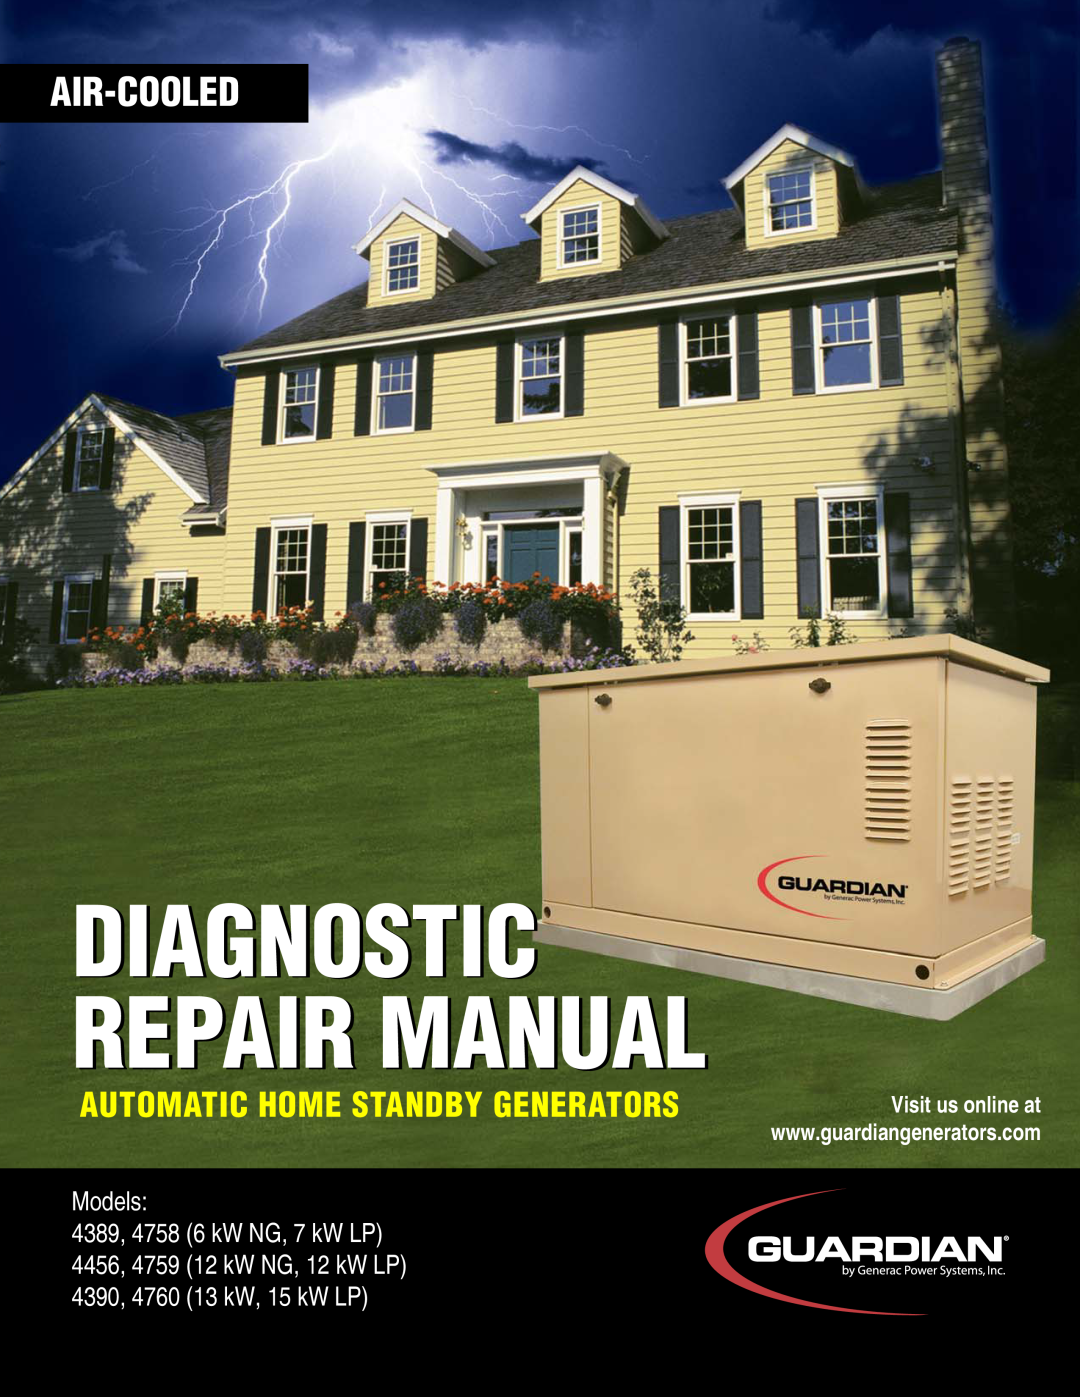 Guardian Technologies 4390, 4456 manual Diagnostic Repair Manual, Air-Cooled, Automatic Home Standby Generators, Models 